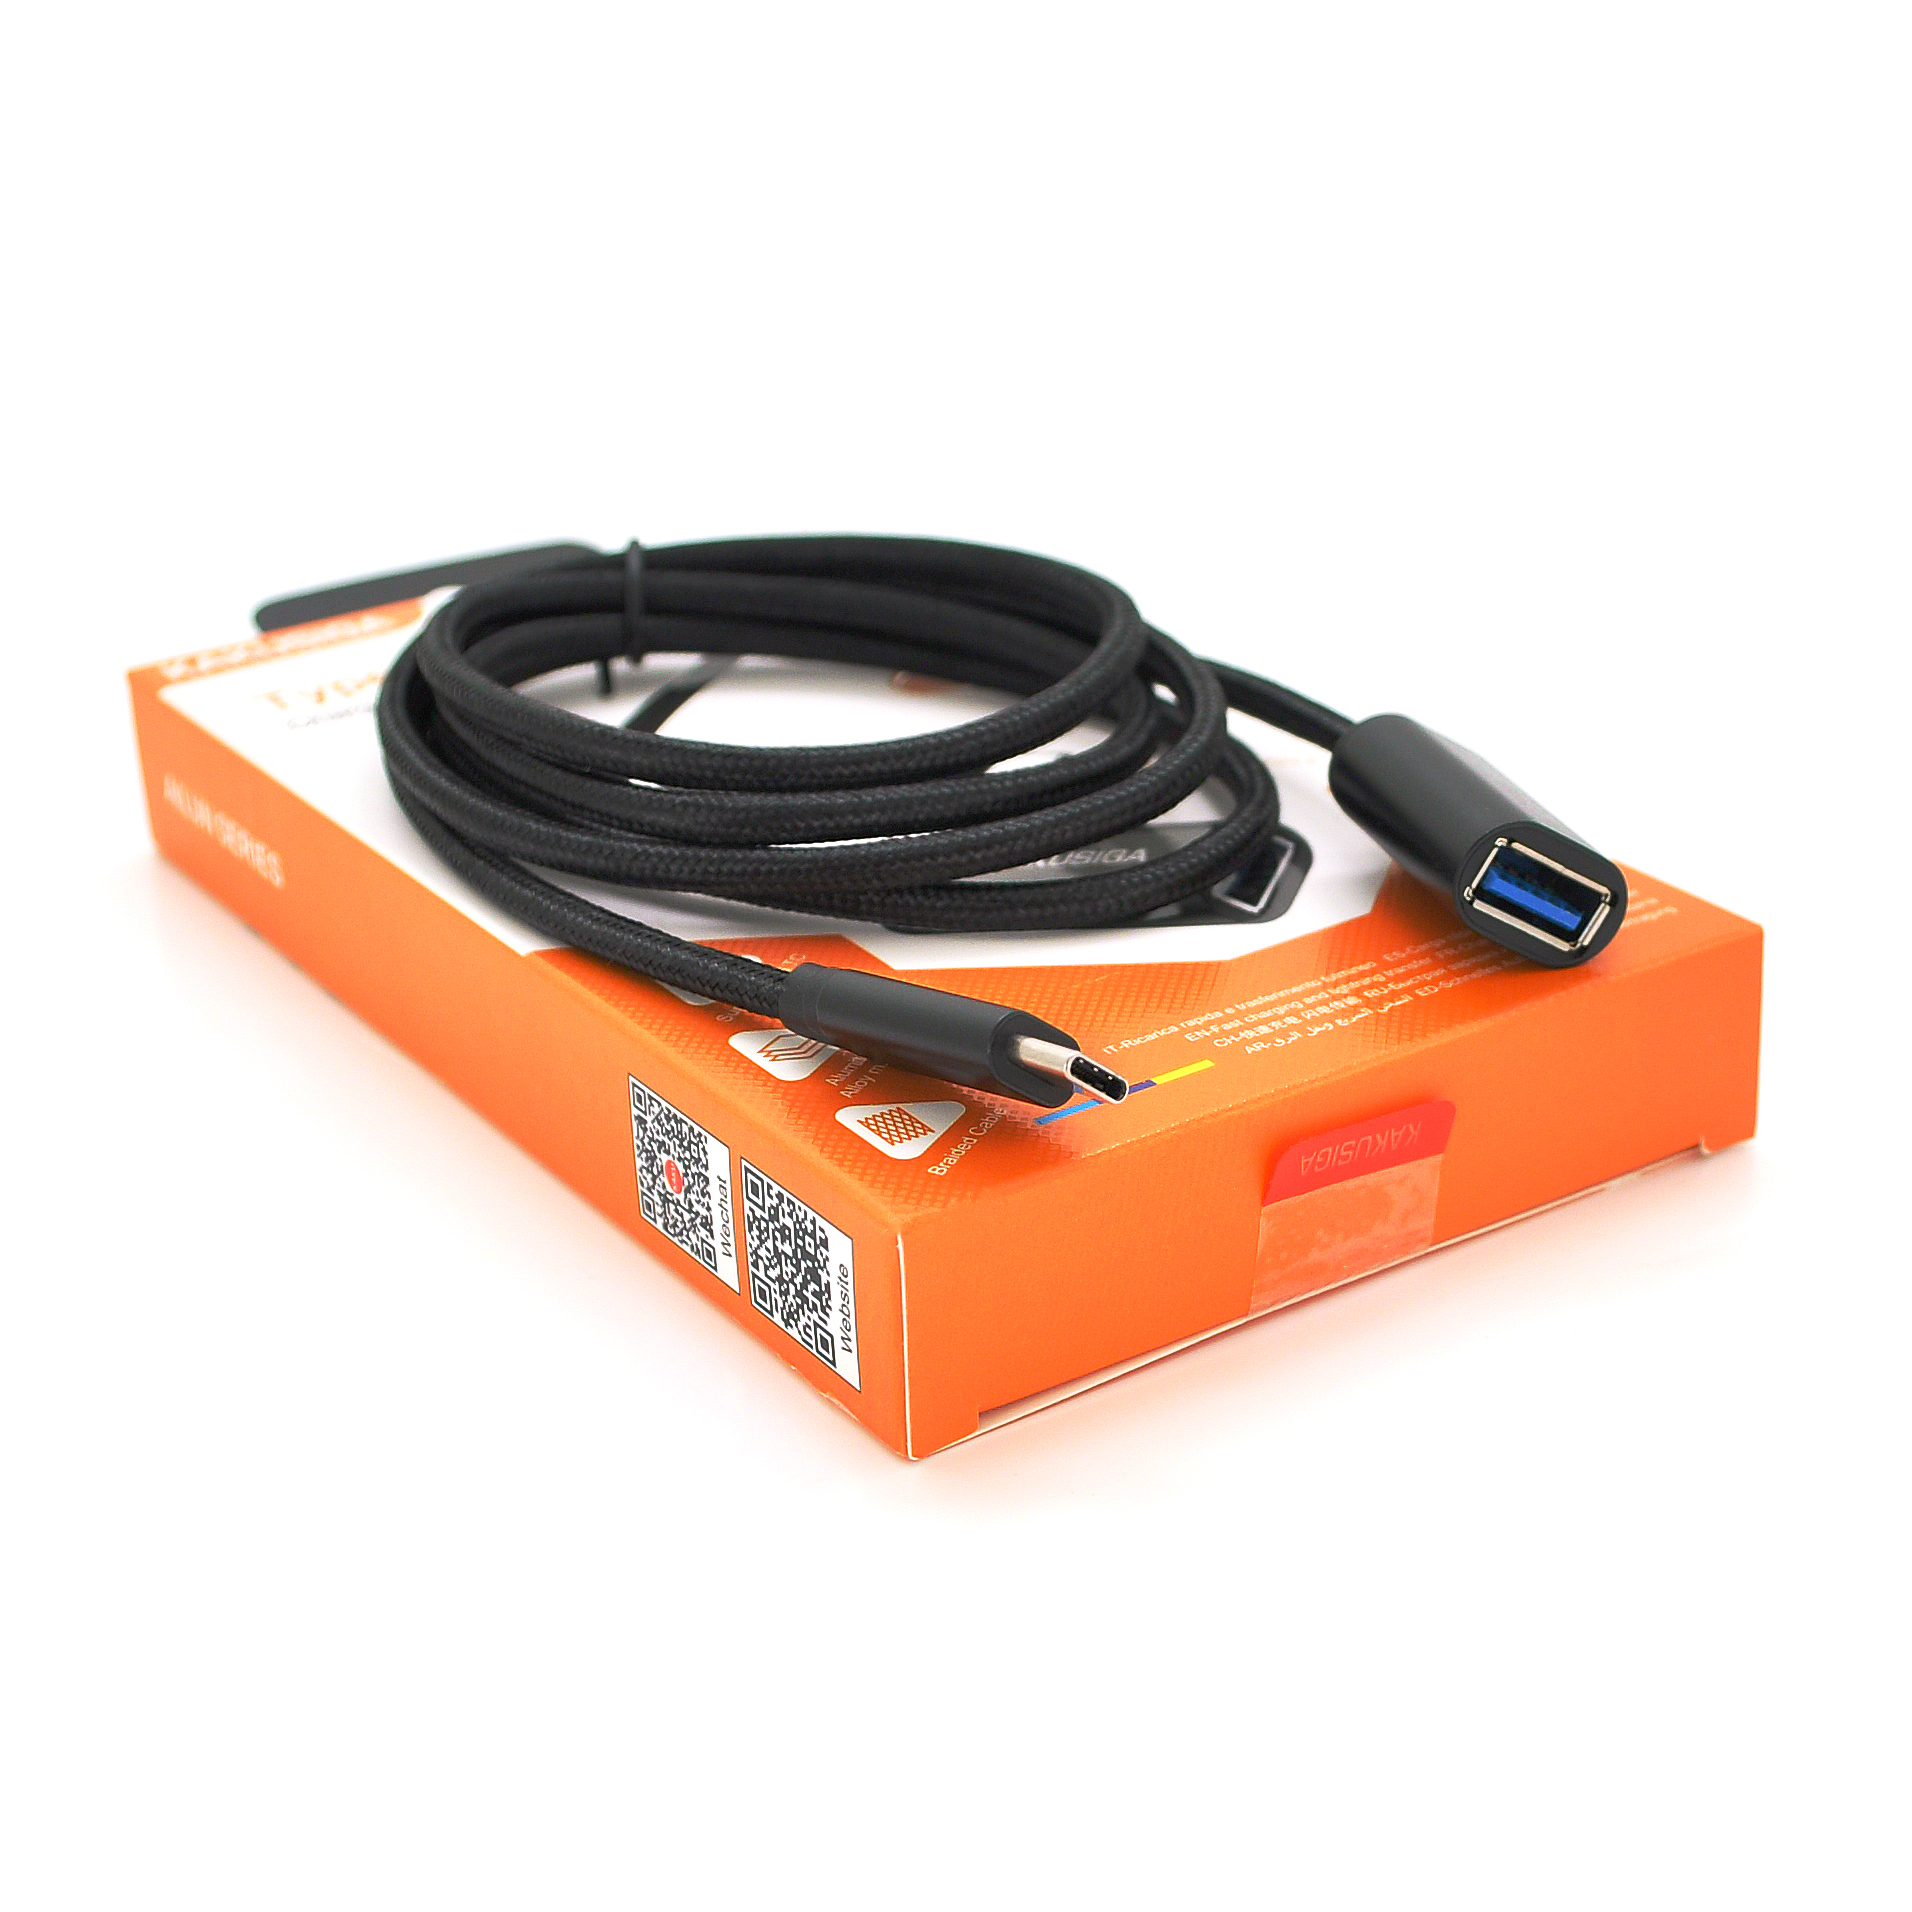 Перехідник iKAKU KSC-754 AILUN Type-c(Male) to USB female USB3.0 charging data extension cable Black, Box